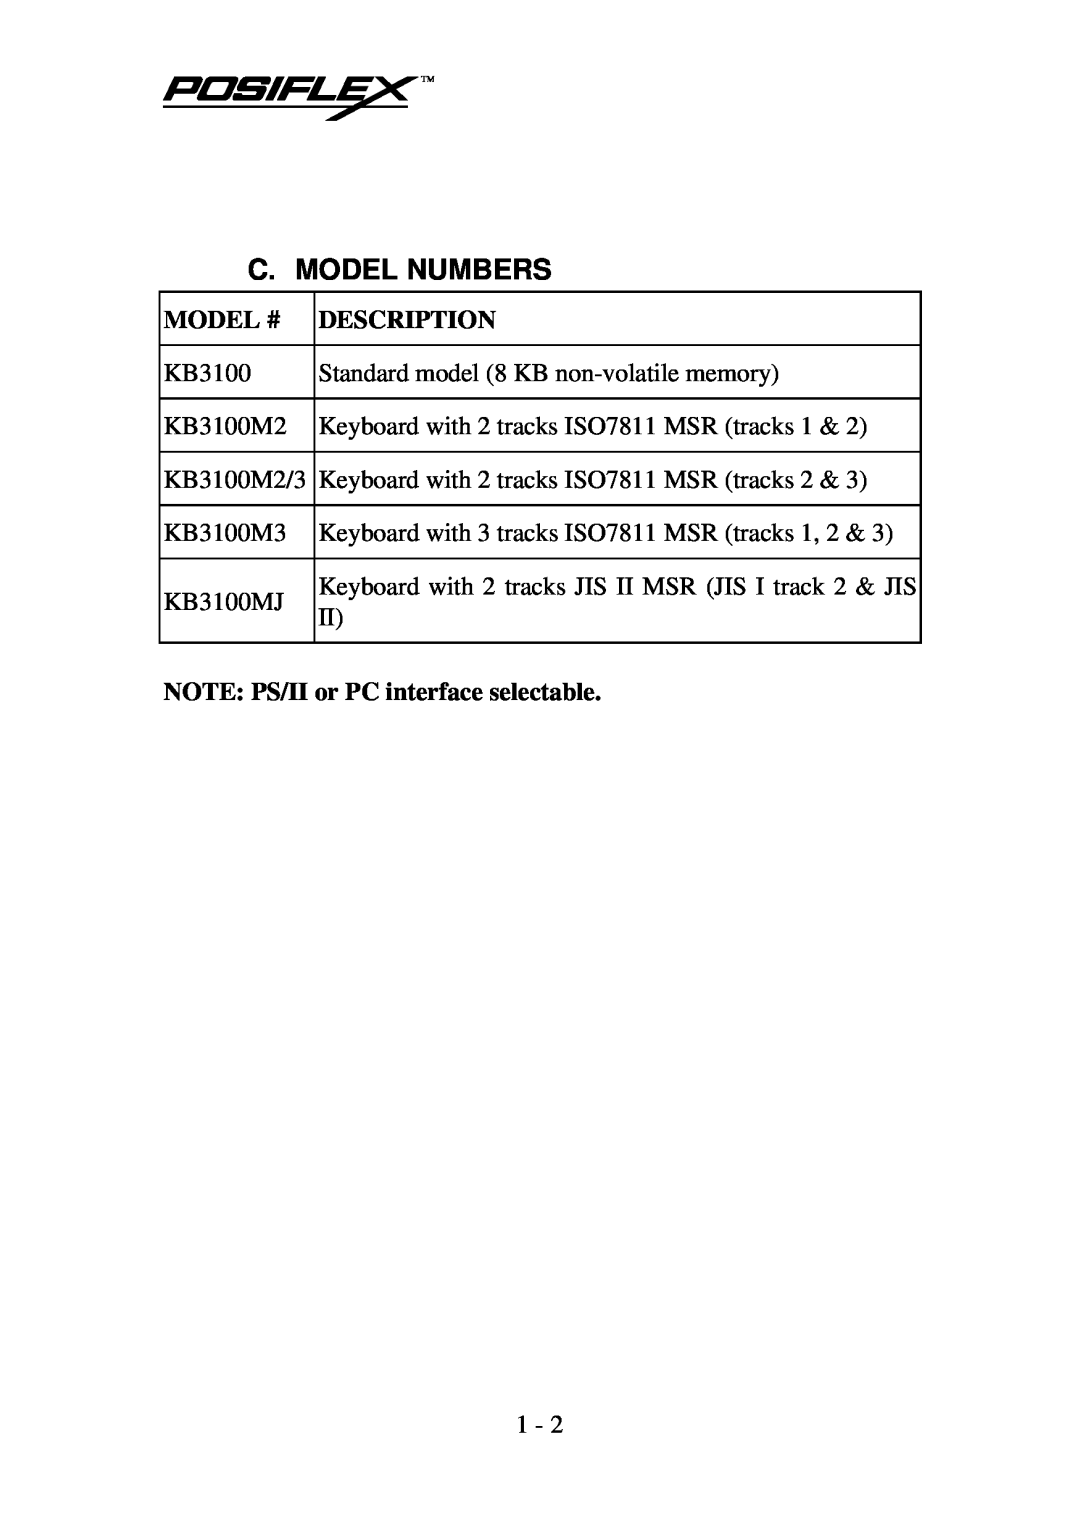 Mustek KB3100 user manual C. Model Numbers, Model #, Description, NOTE PS/II or PC interface selectable 